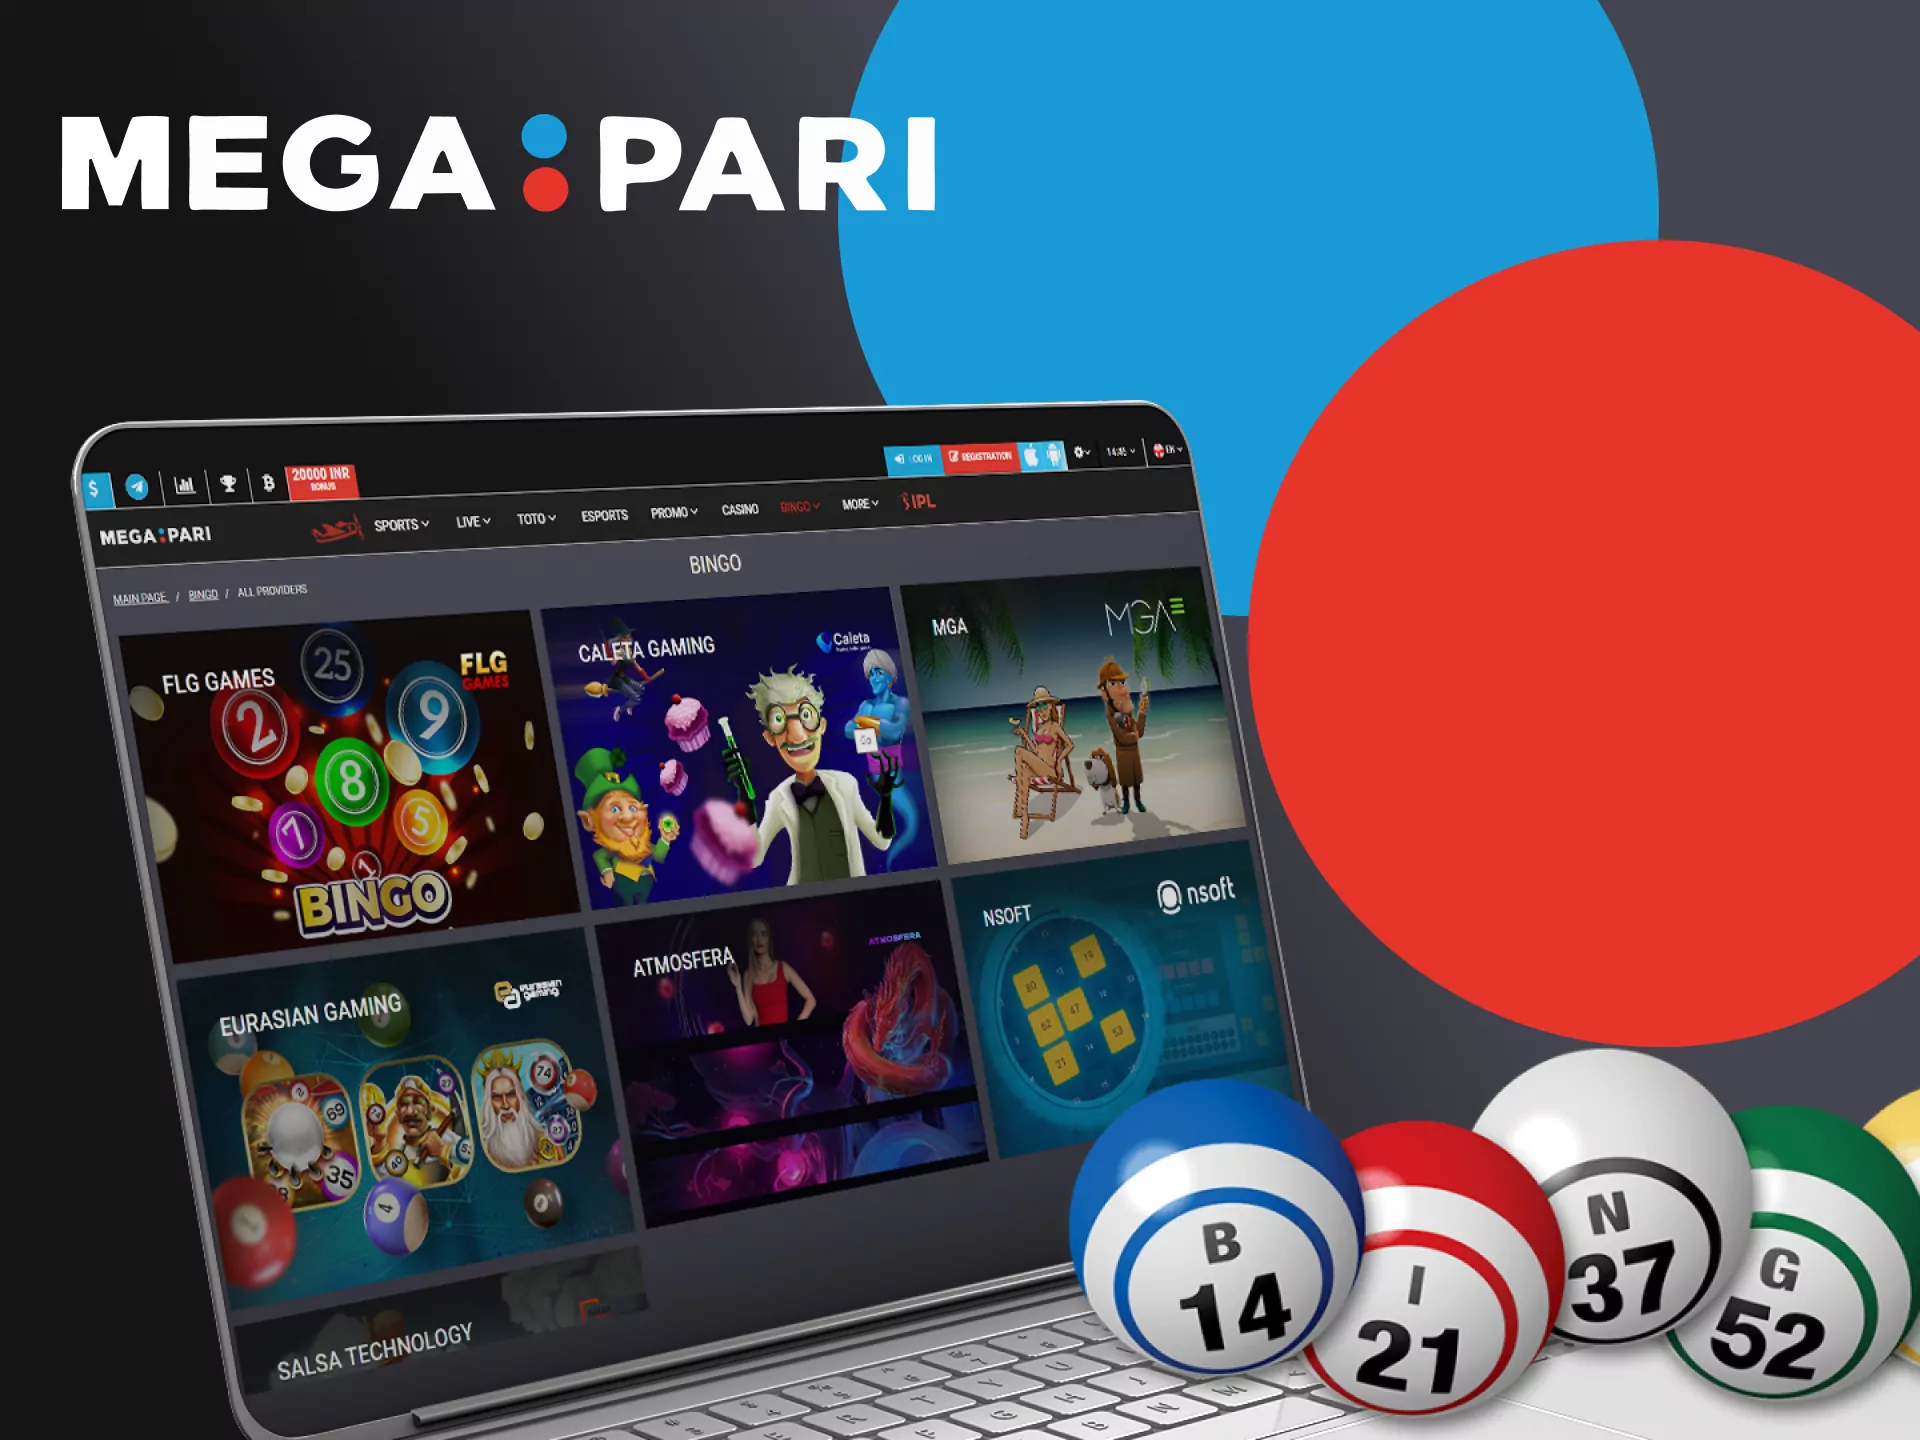 Select the bingo section on the Megapari website.